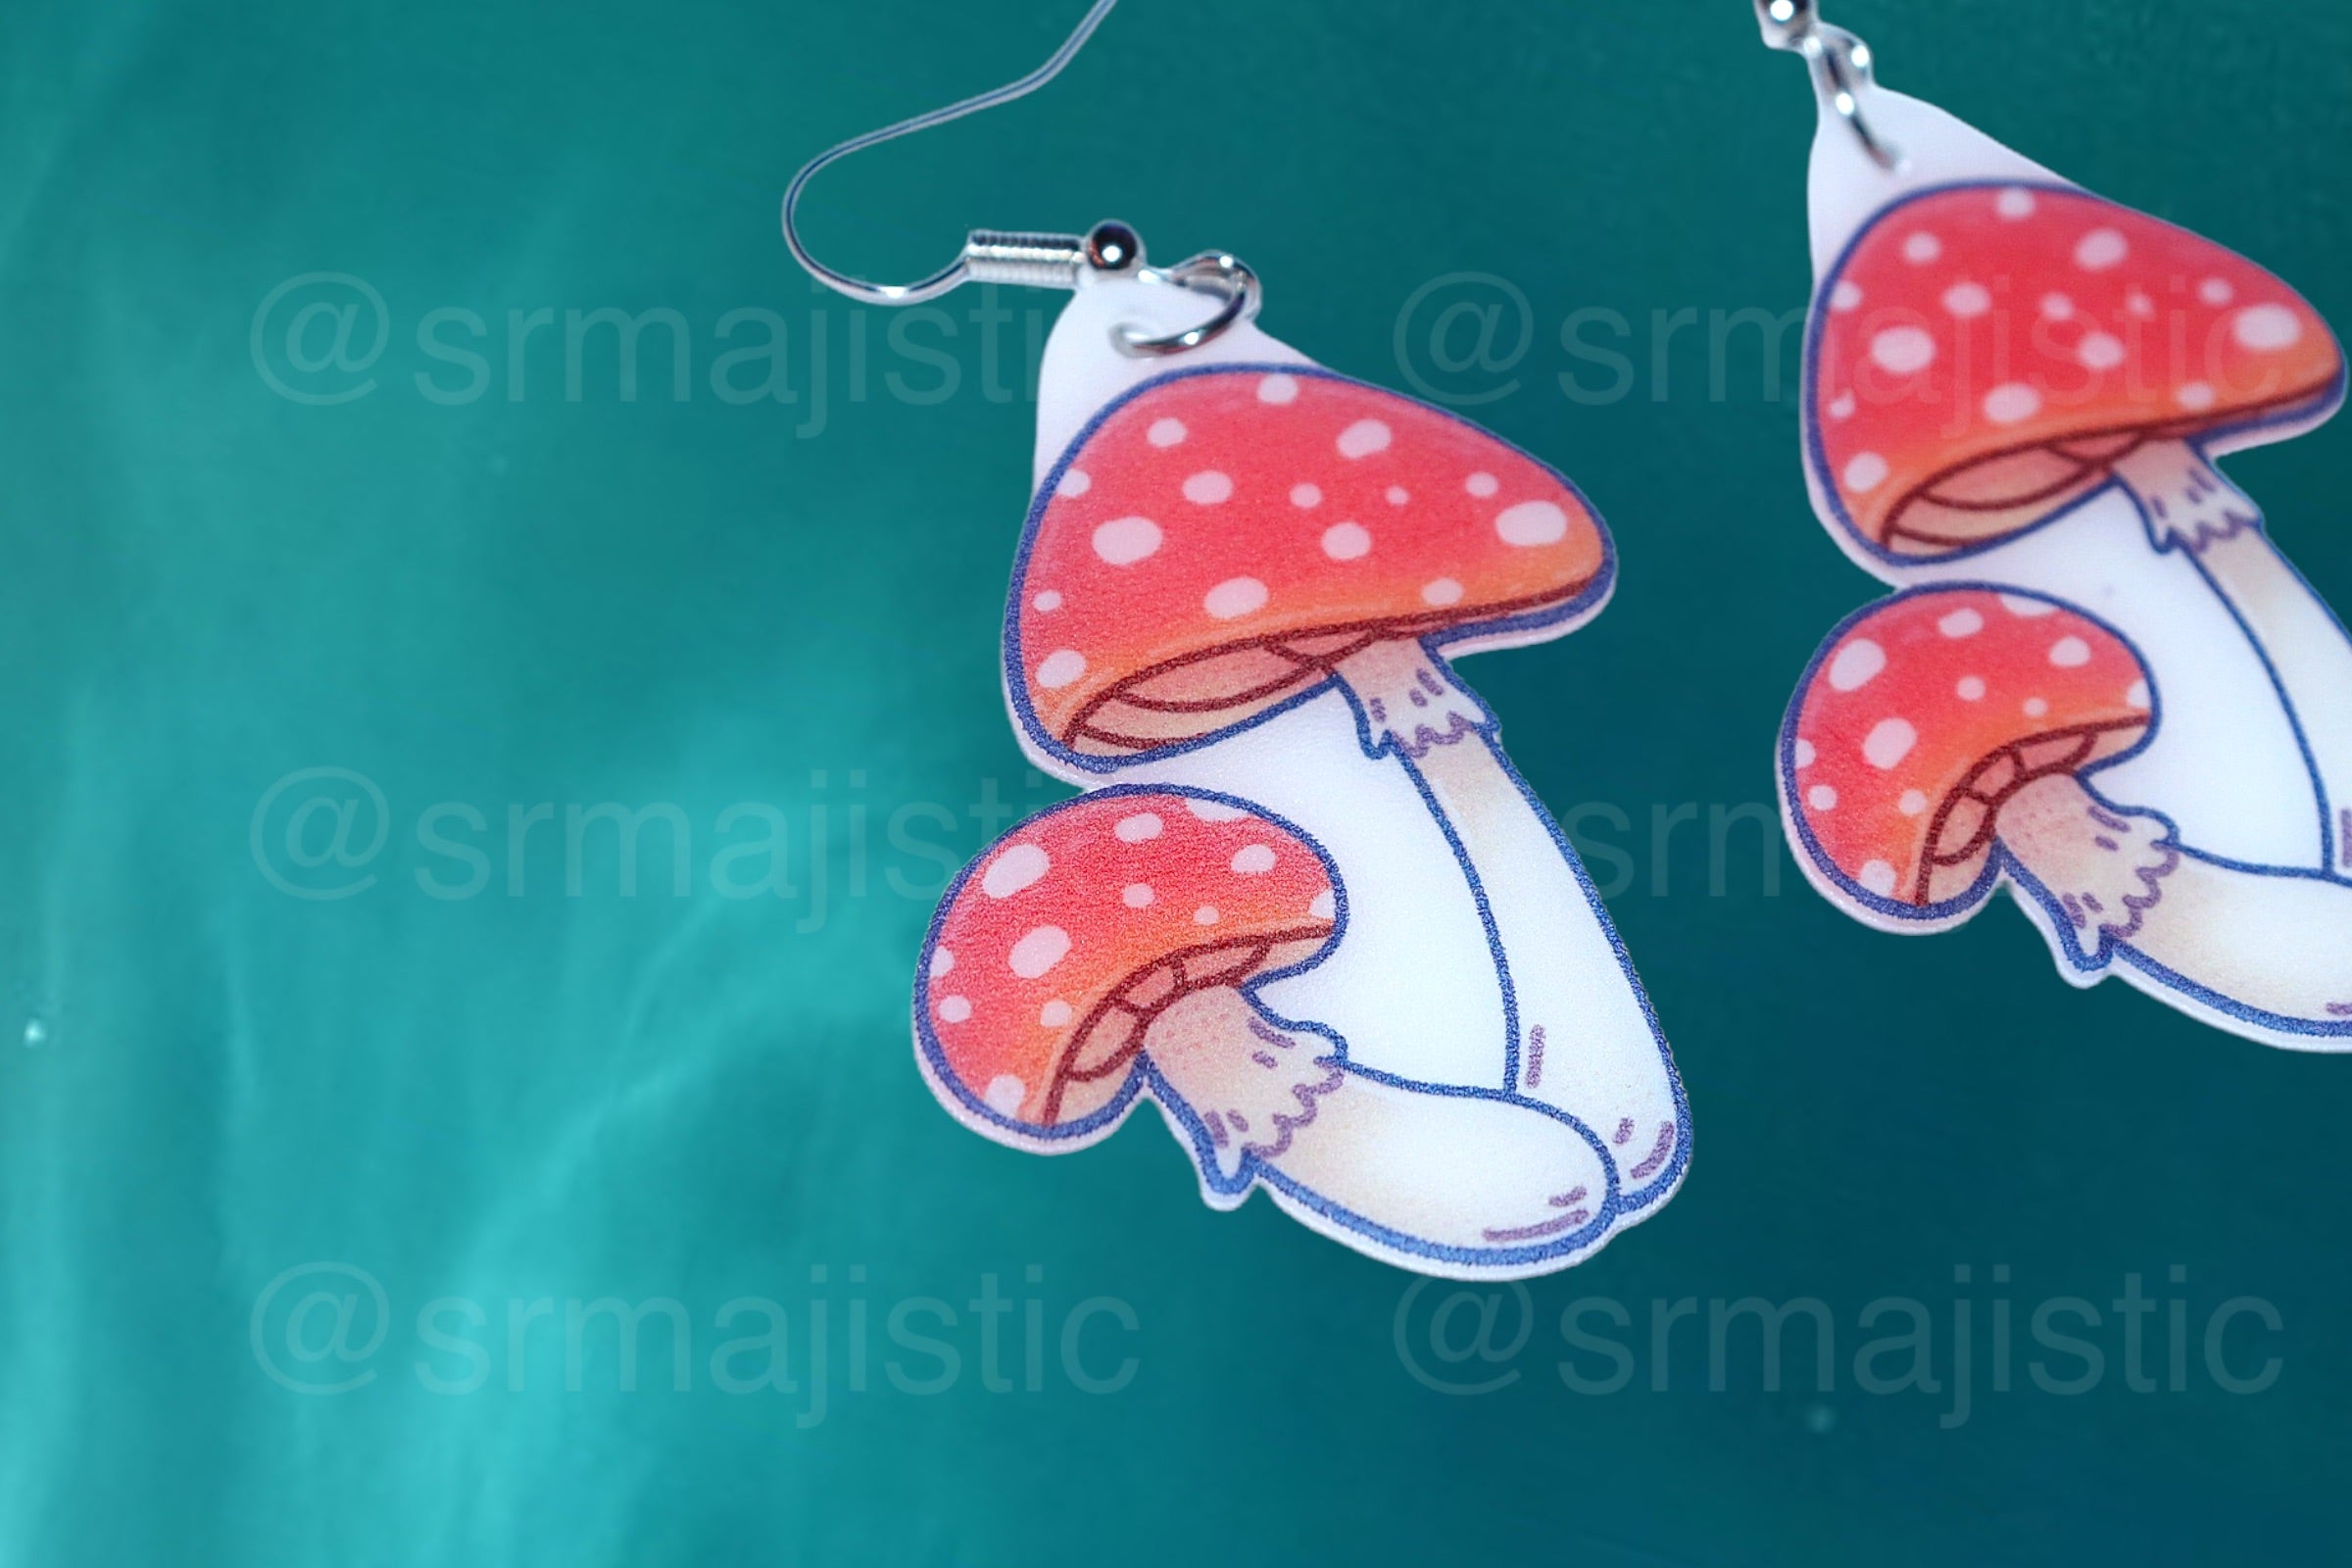 Cute Little Mushroom Handmade Earrings (collaboration with @saltnox)